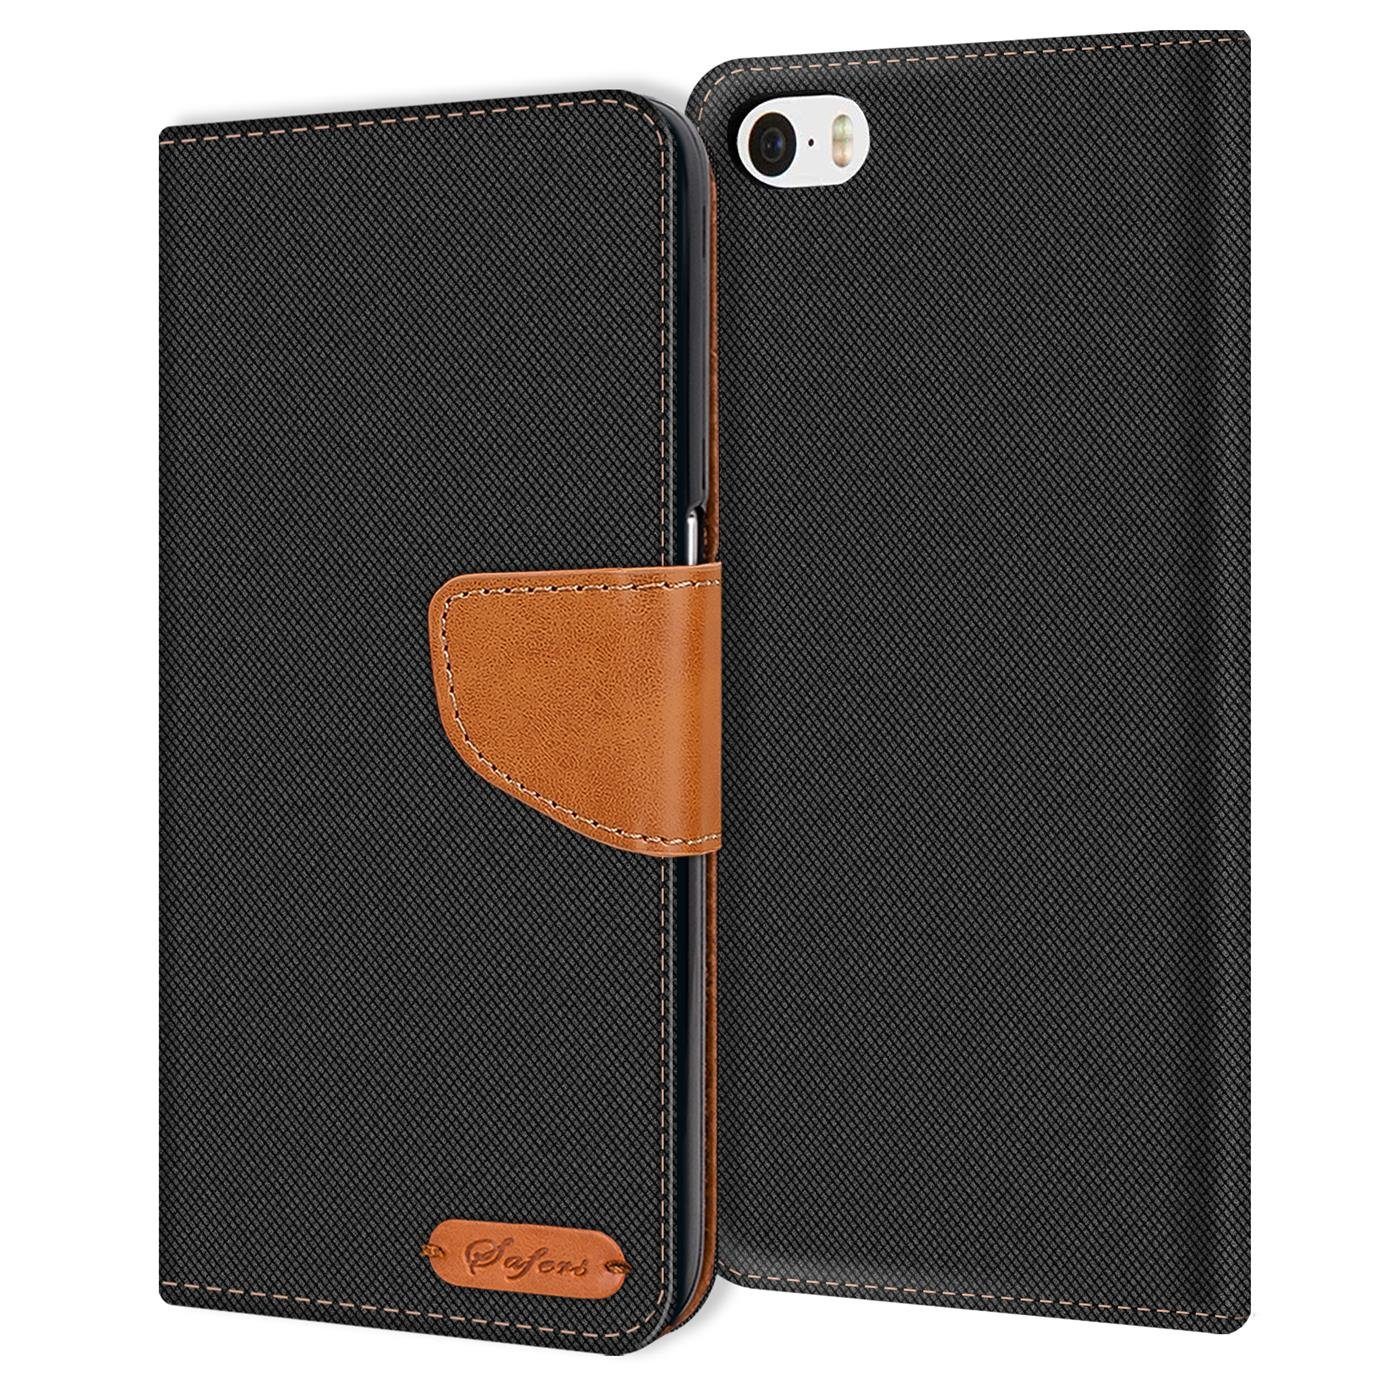 CoolGadget Handyhülle Denim Schutzhülle Flip Case für Apple iPhone 4 / 4S  3,5 Zoll, Book Cover Handy Tasche Hülle für iPhone 4s Klapphülle